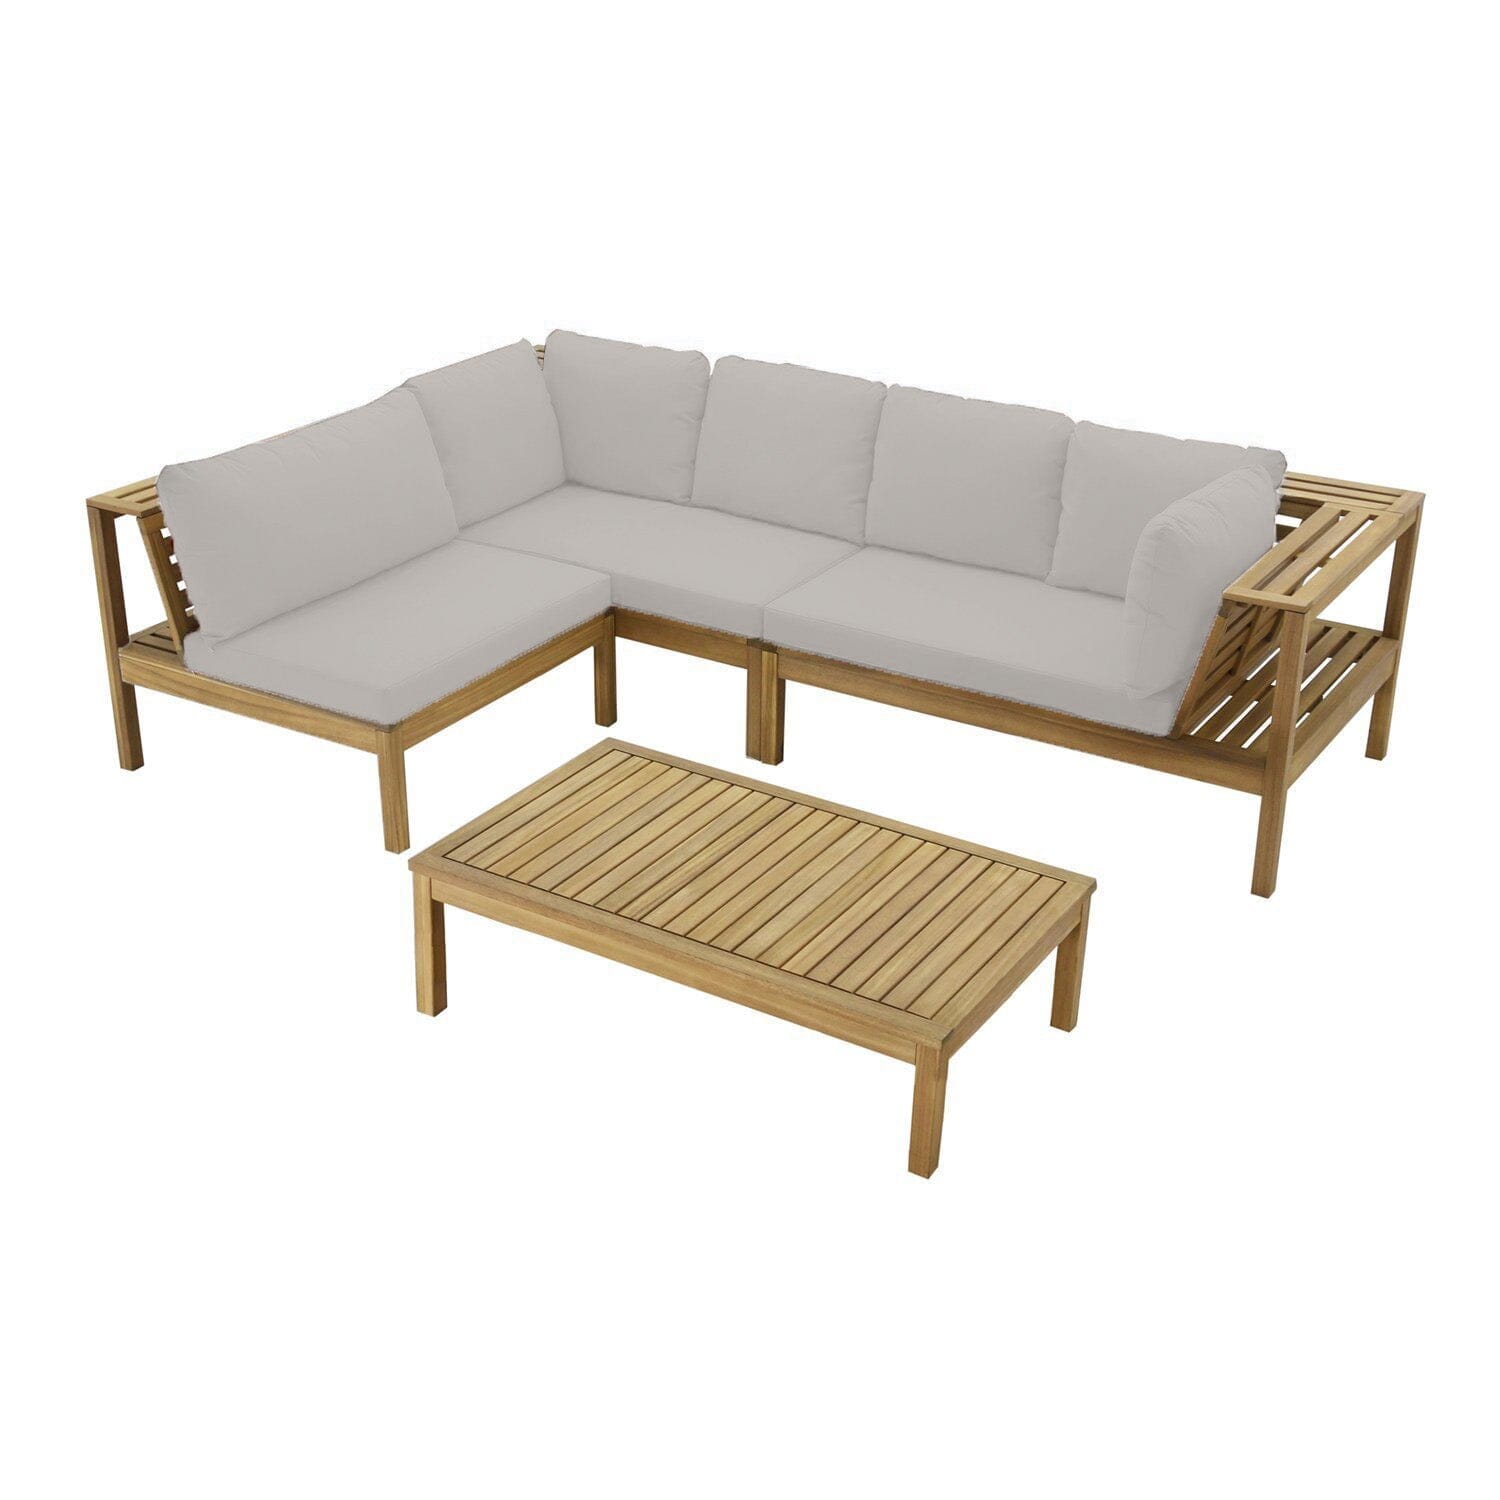 Dakota outdoor sofa set with cream parasol - acacia wood - Natural Cushions